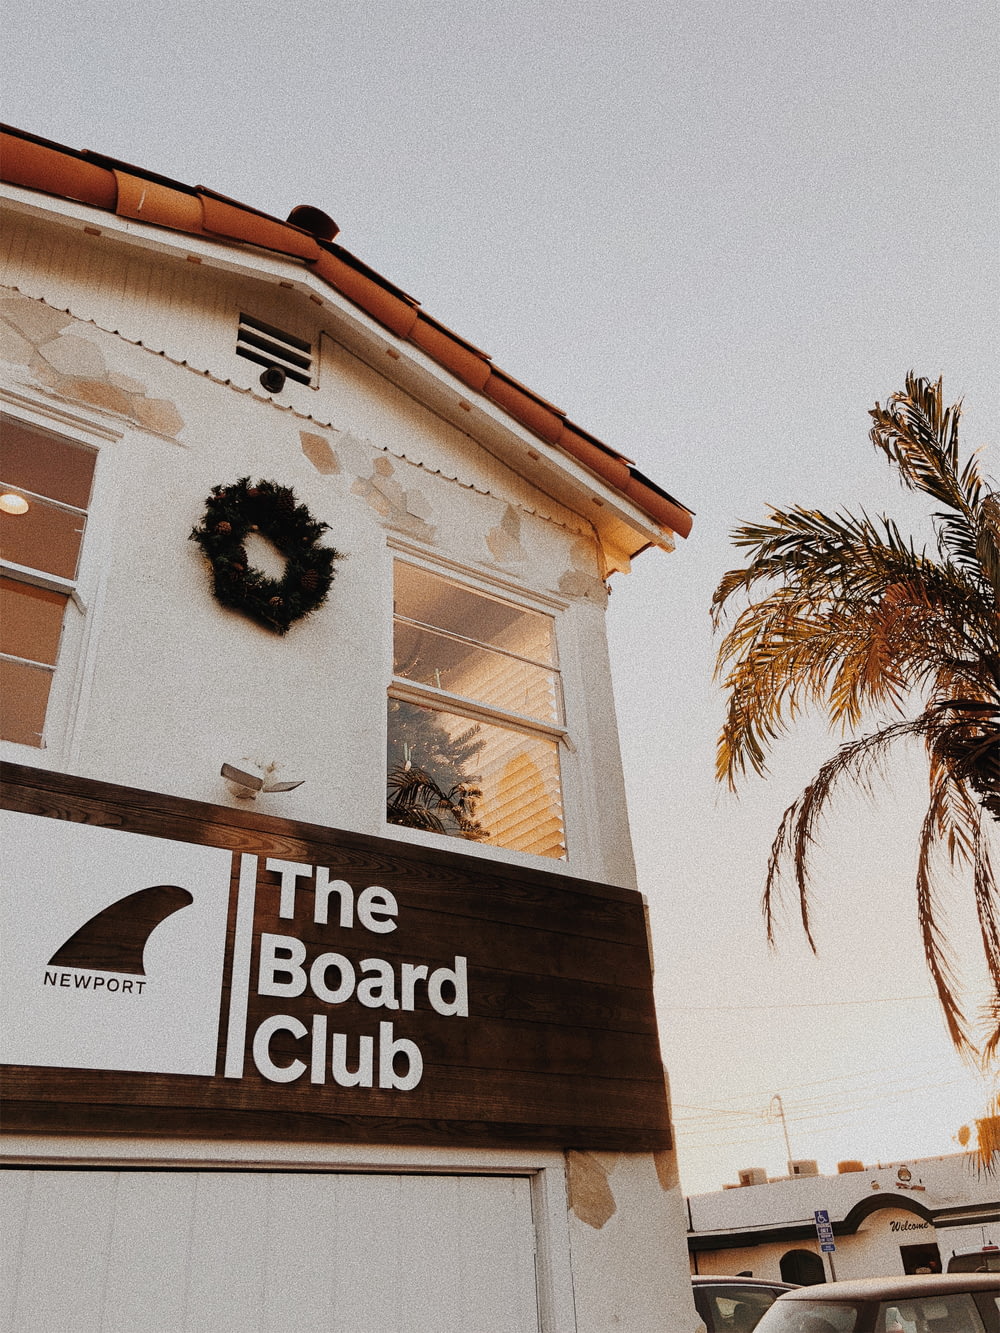 The Board Club building